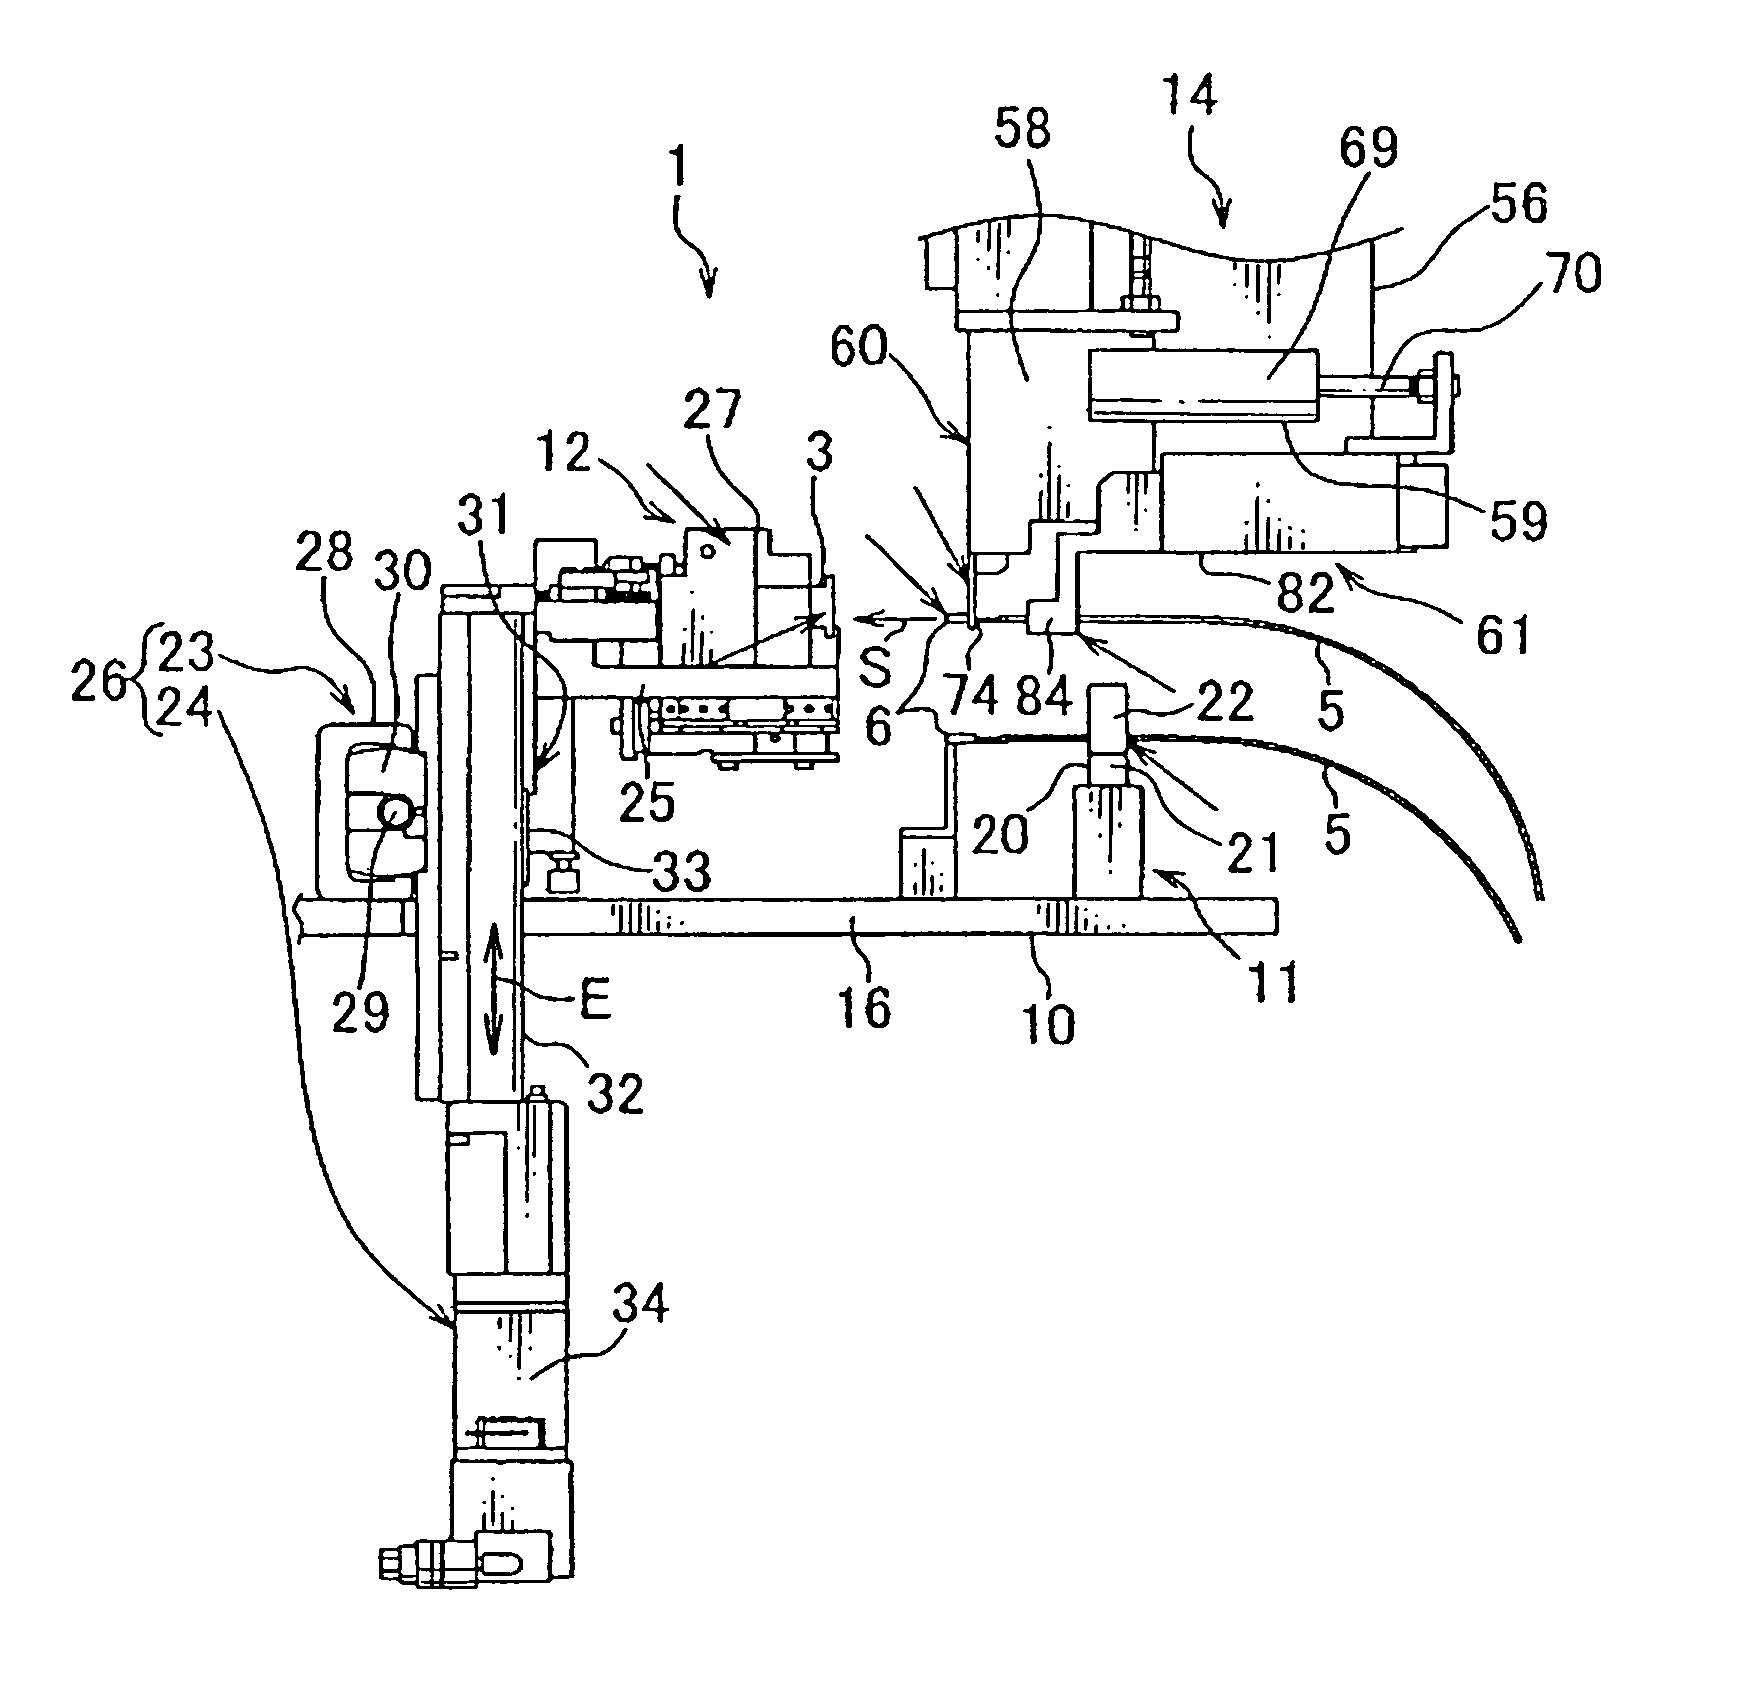 Terminal insertion apparatus